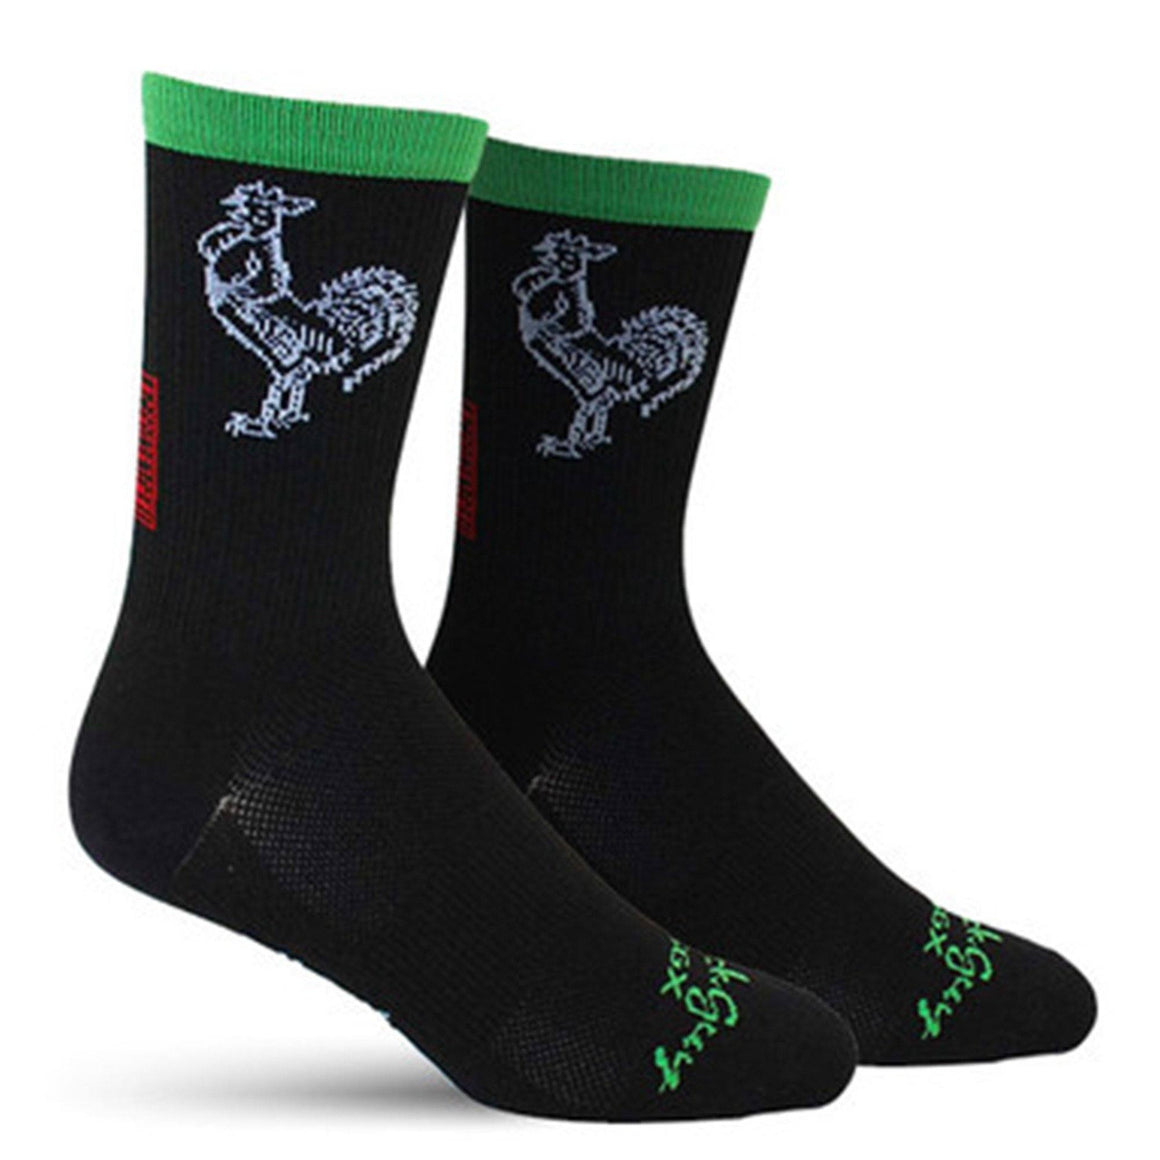 Apparel - High Performance Sriracha Socks